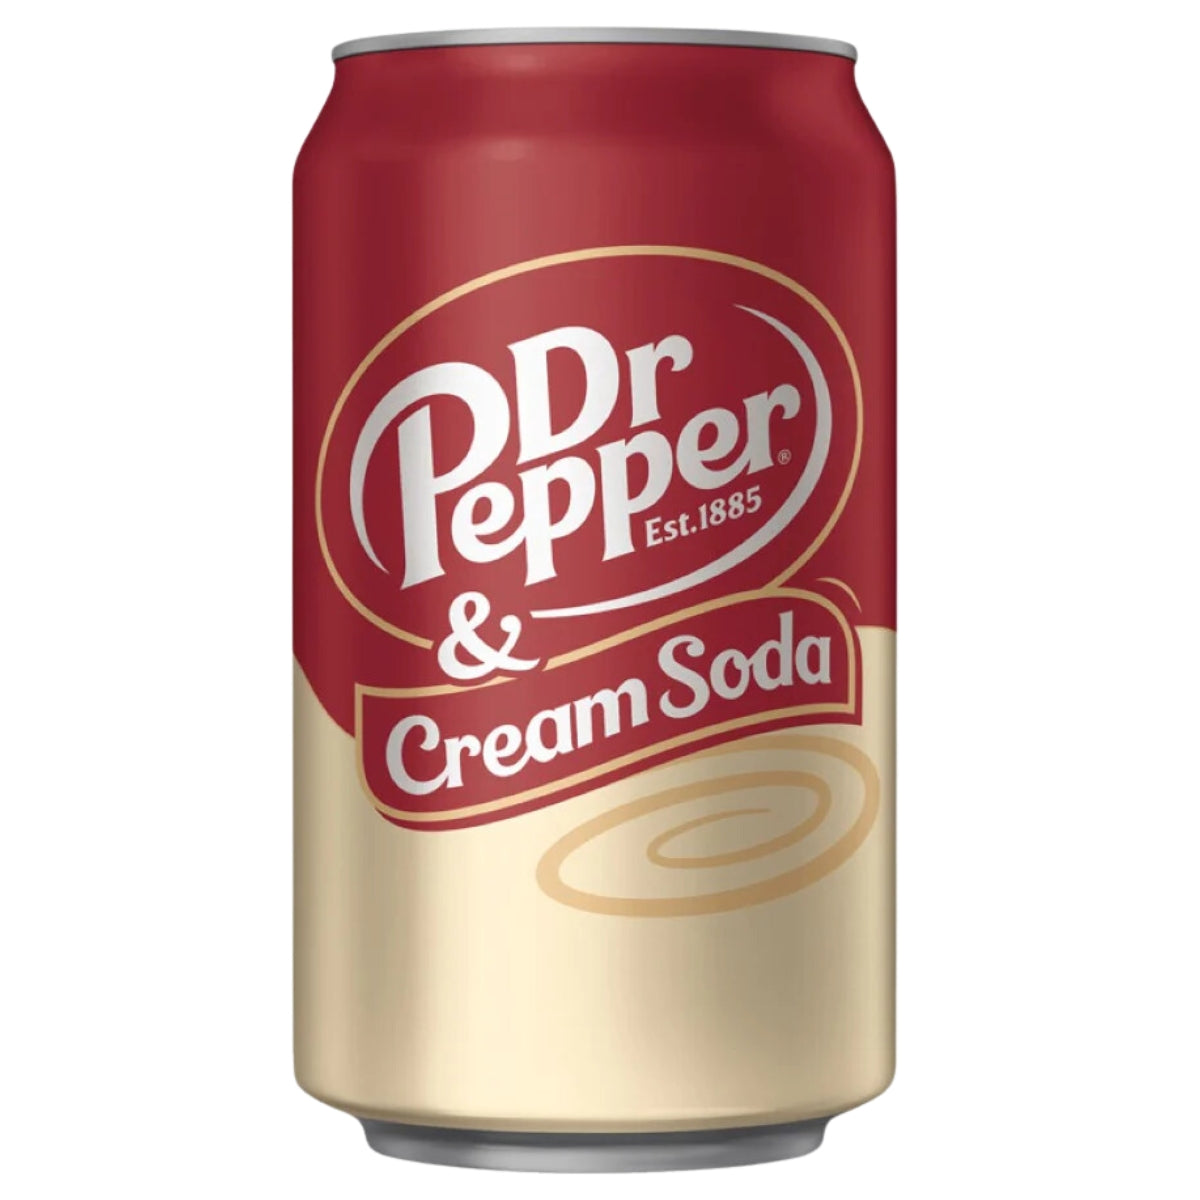 A can of Dr Pepper - Cream Soda - 330ml.